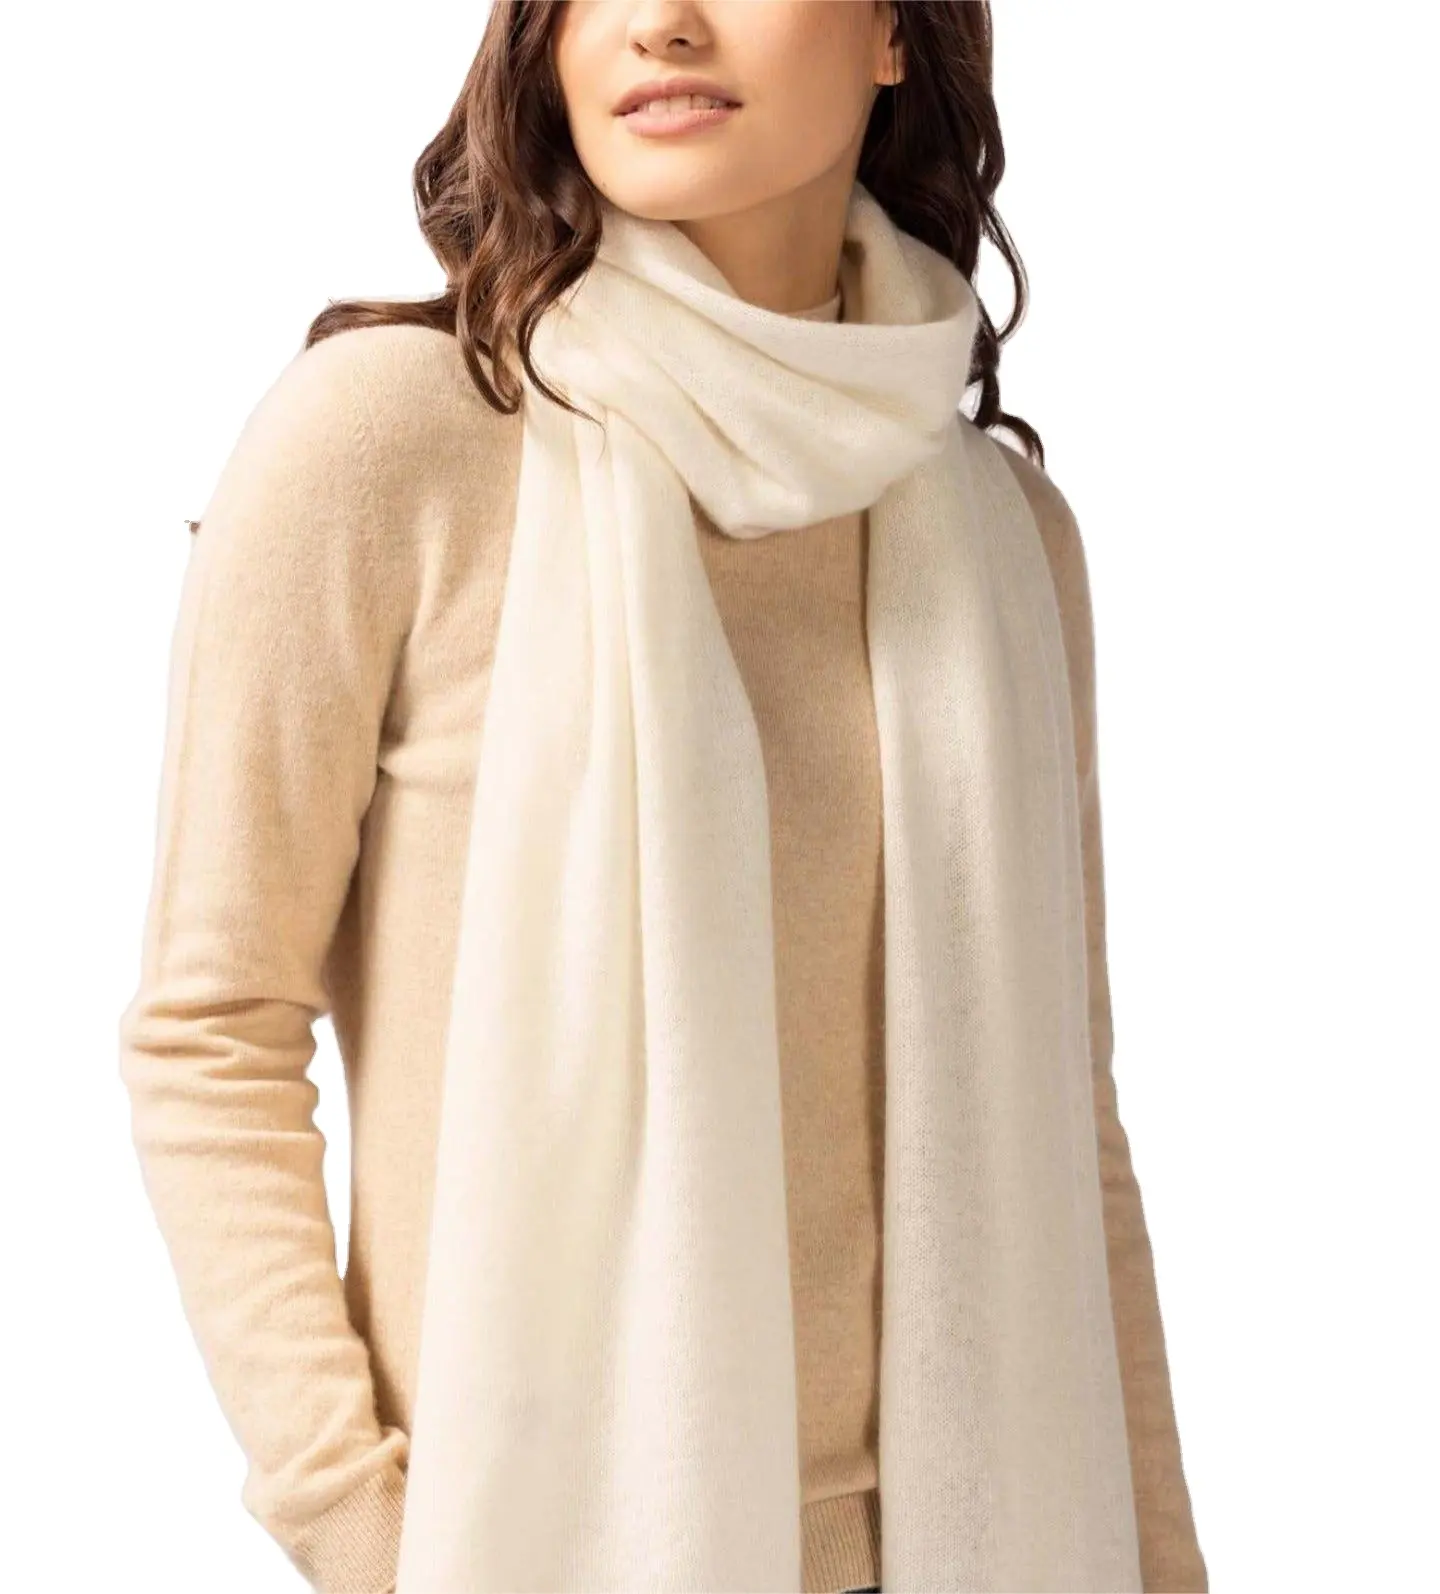 sleek stylish warm comfortable classic knitted cashmere scarf wrap shawl unisex in frigid days